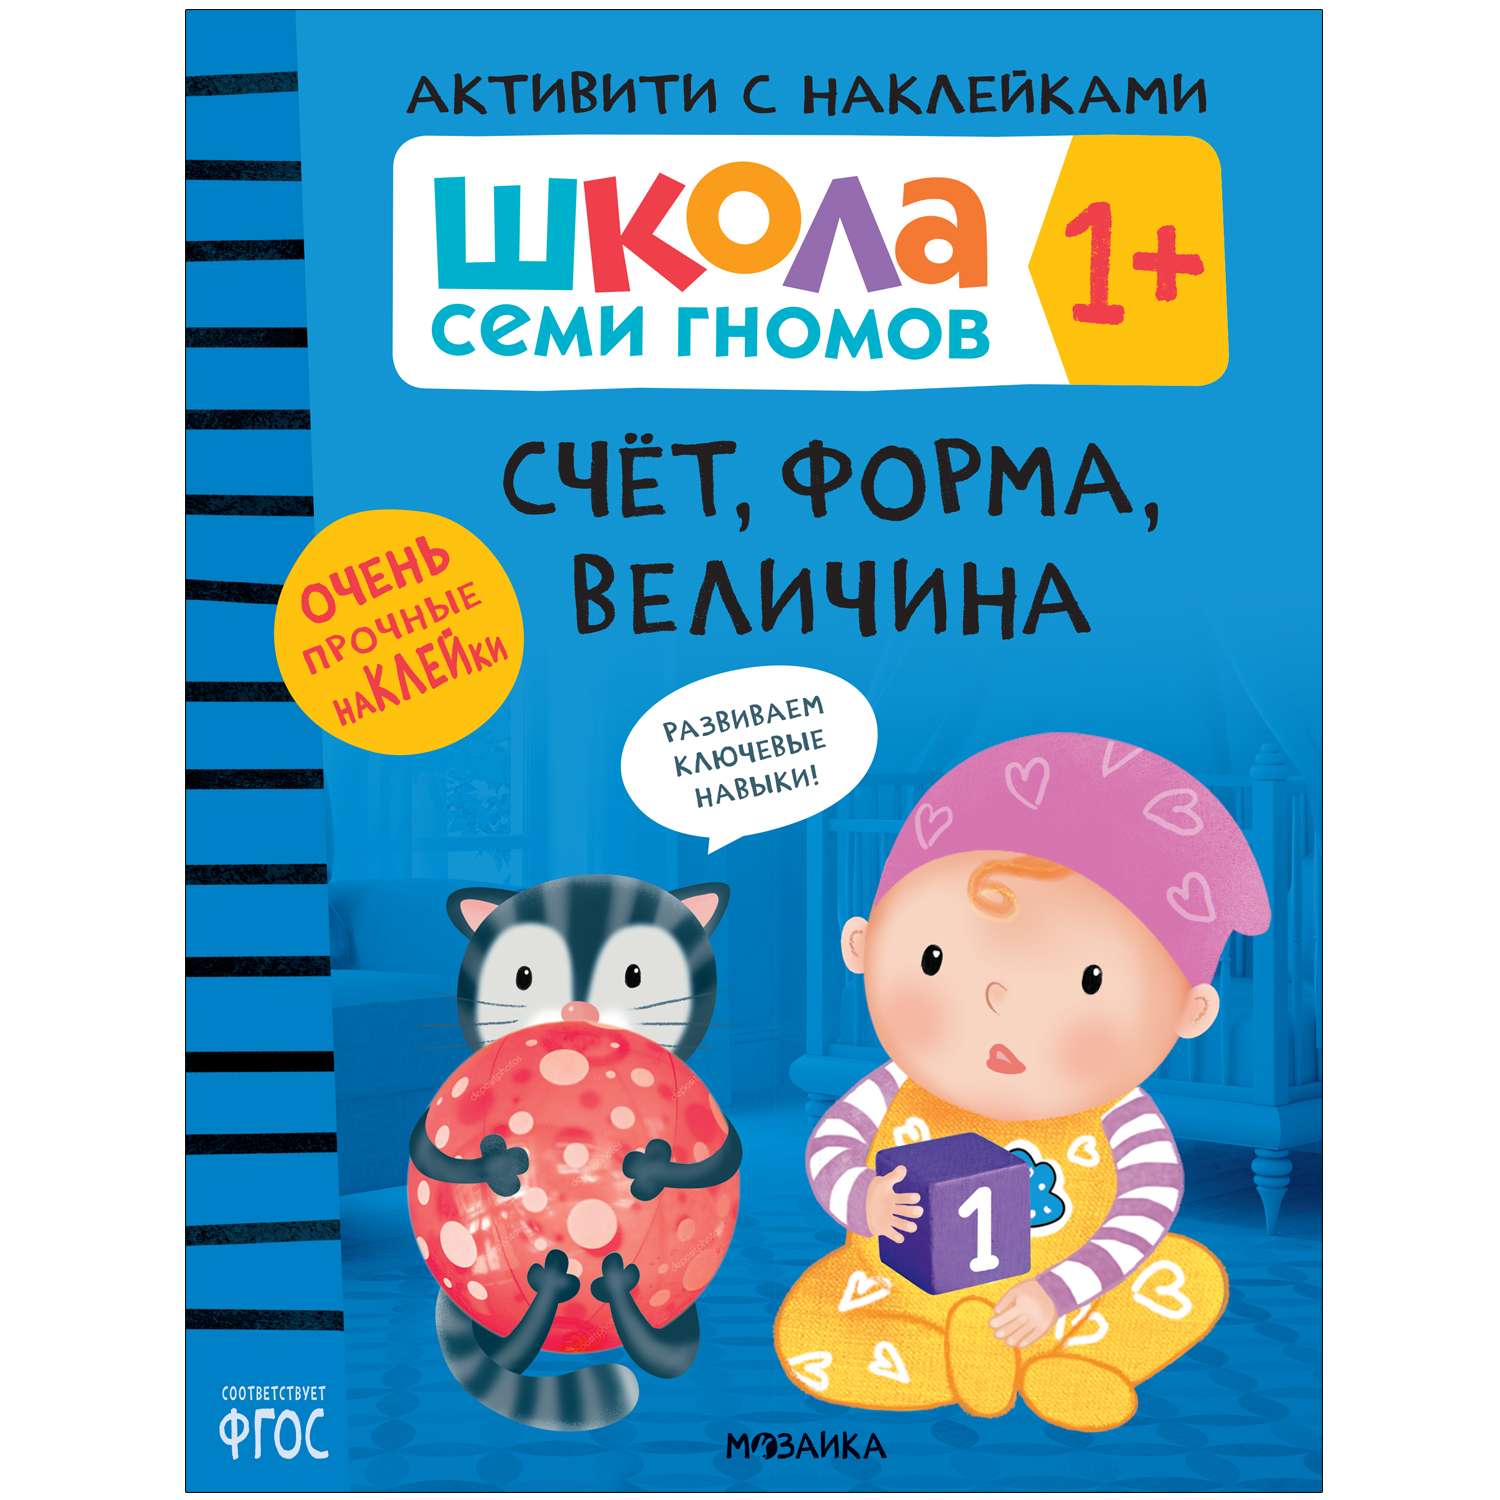 Книга МОЗАИКА kids Школа Cеми Гномов Активити с наклейками Счёт форма величина 1 - фото 1